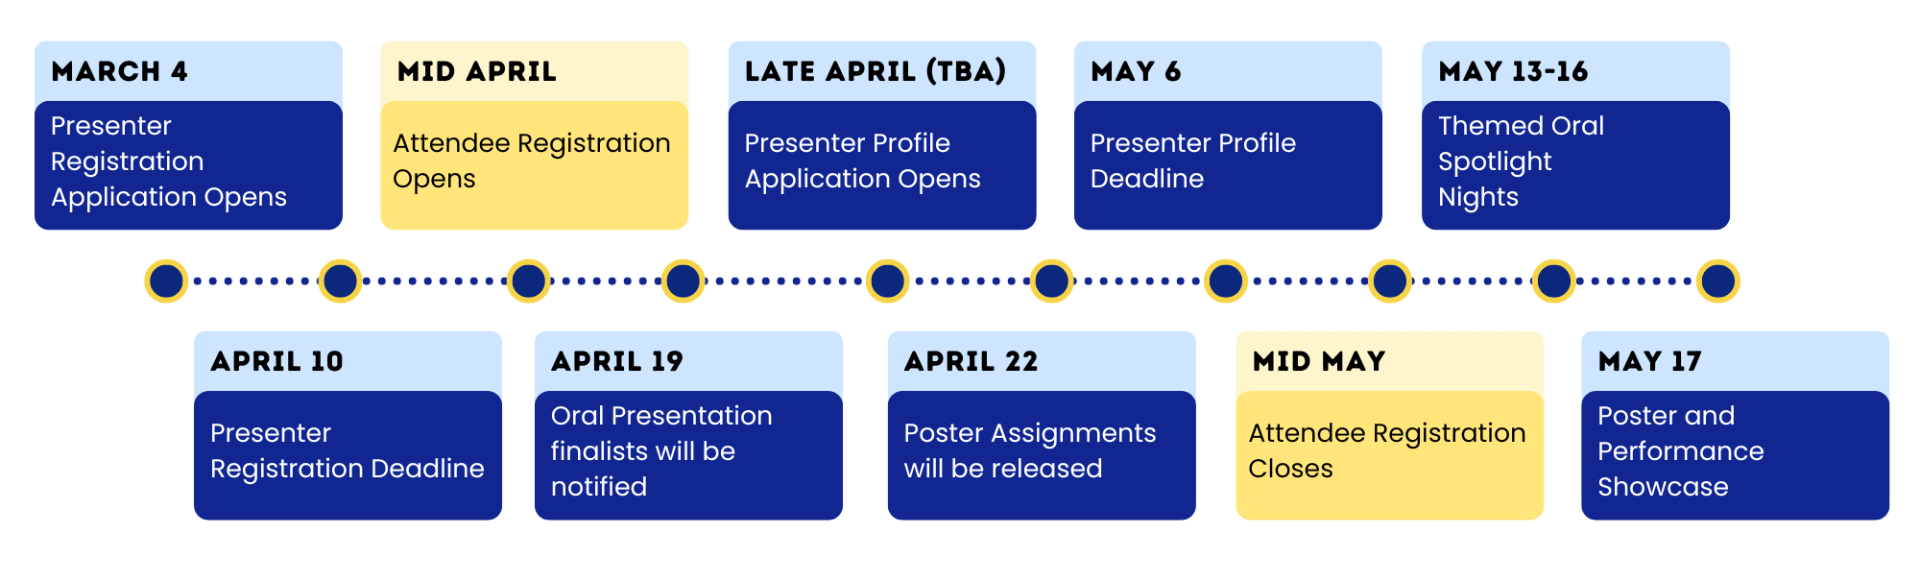 Symposium Preparation Timeline graphic